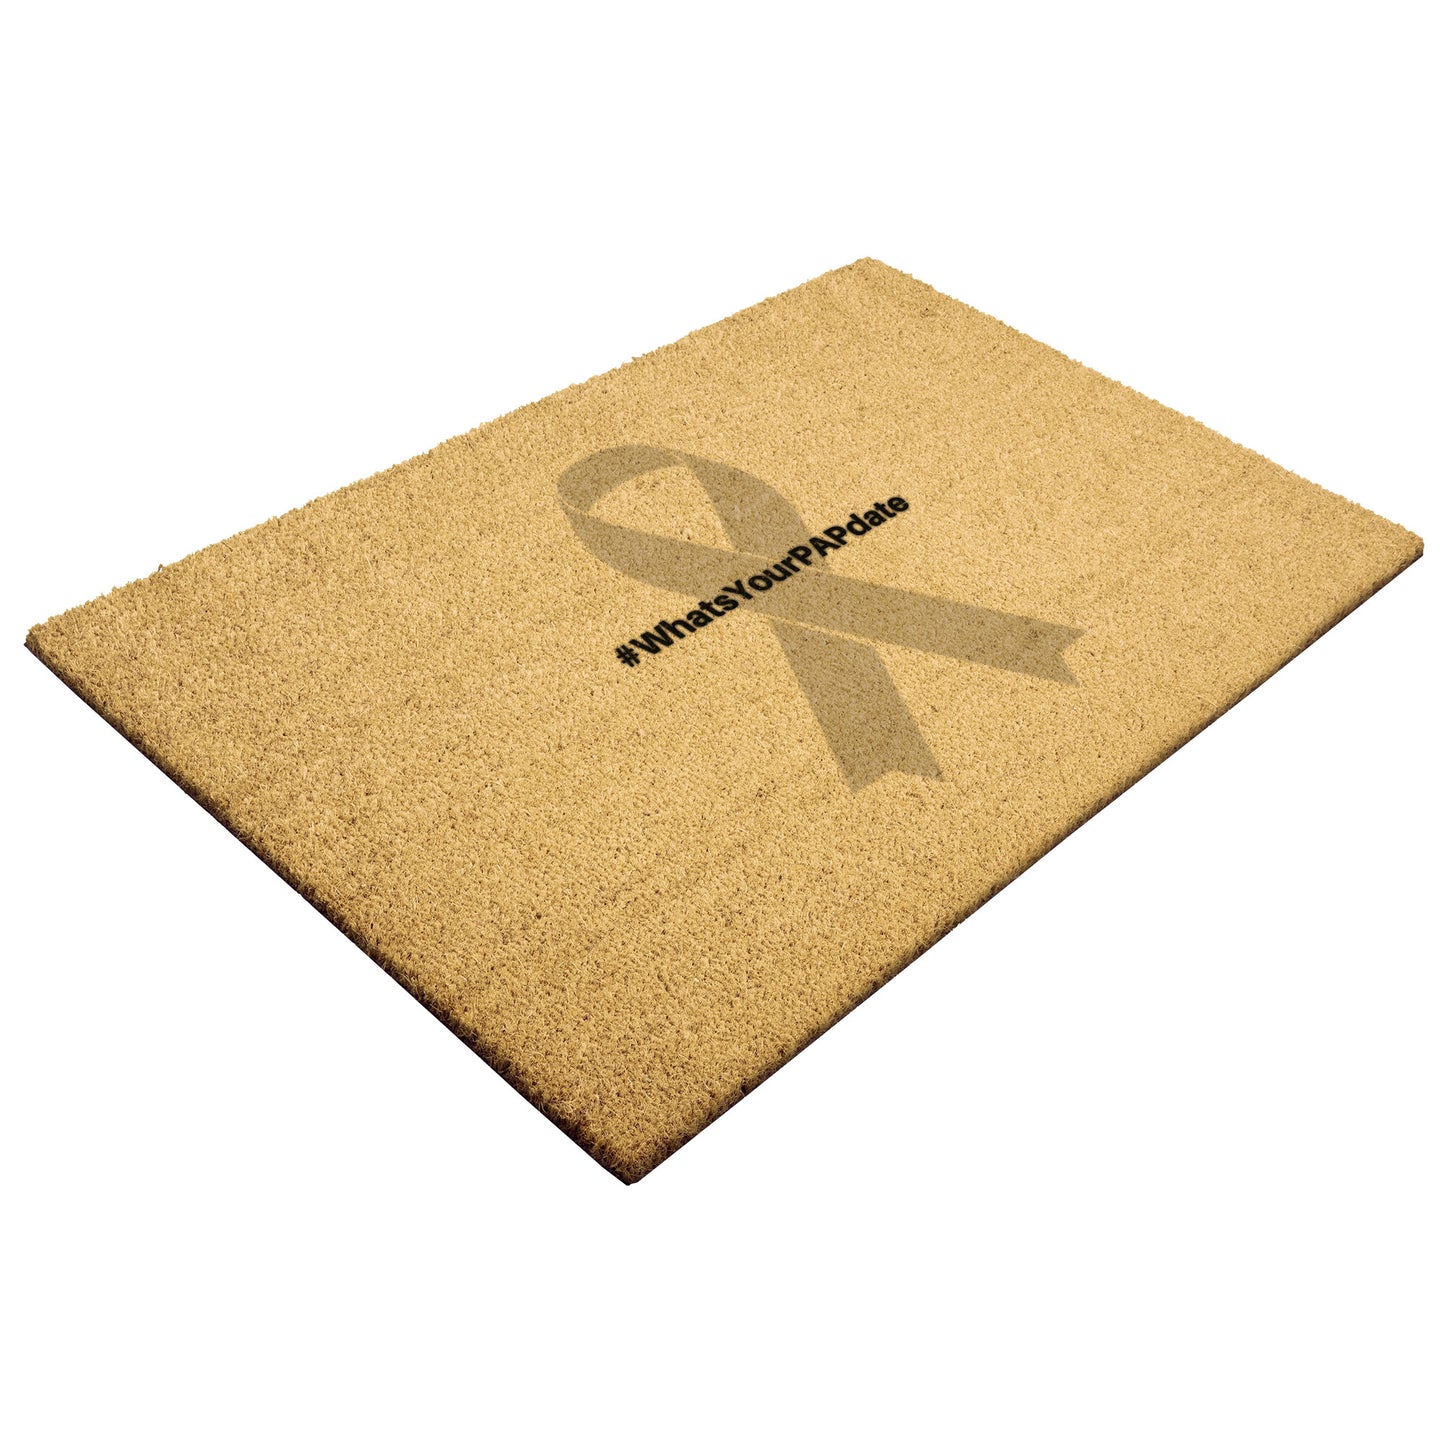 Cervical Cancer Awareness Outdoor Doormat